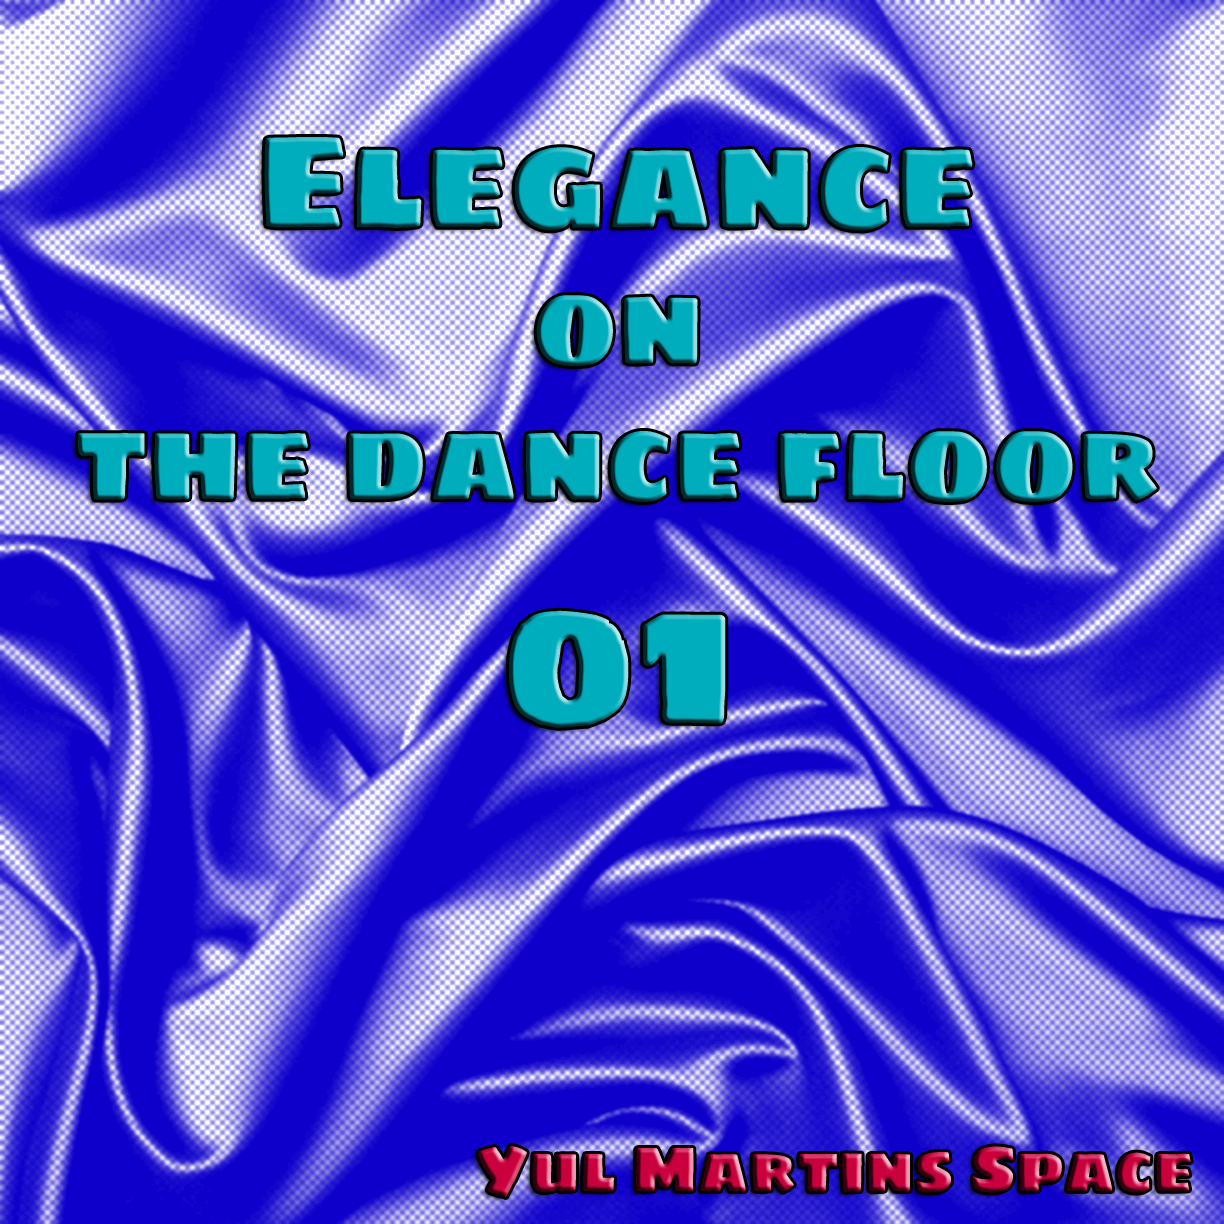 Elegance on the dance floor 01